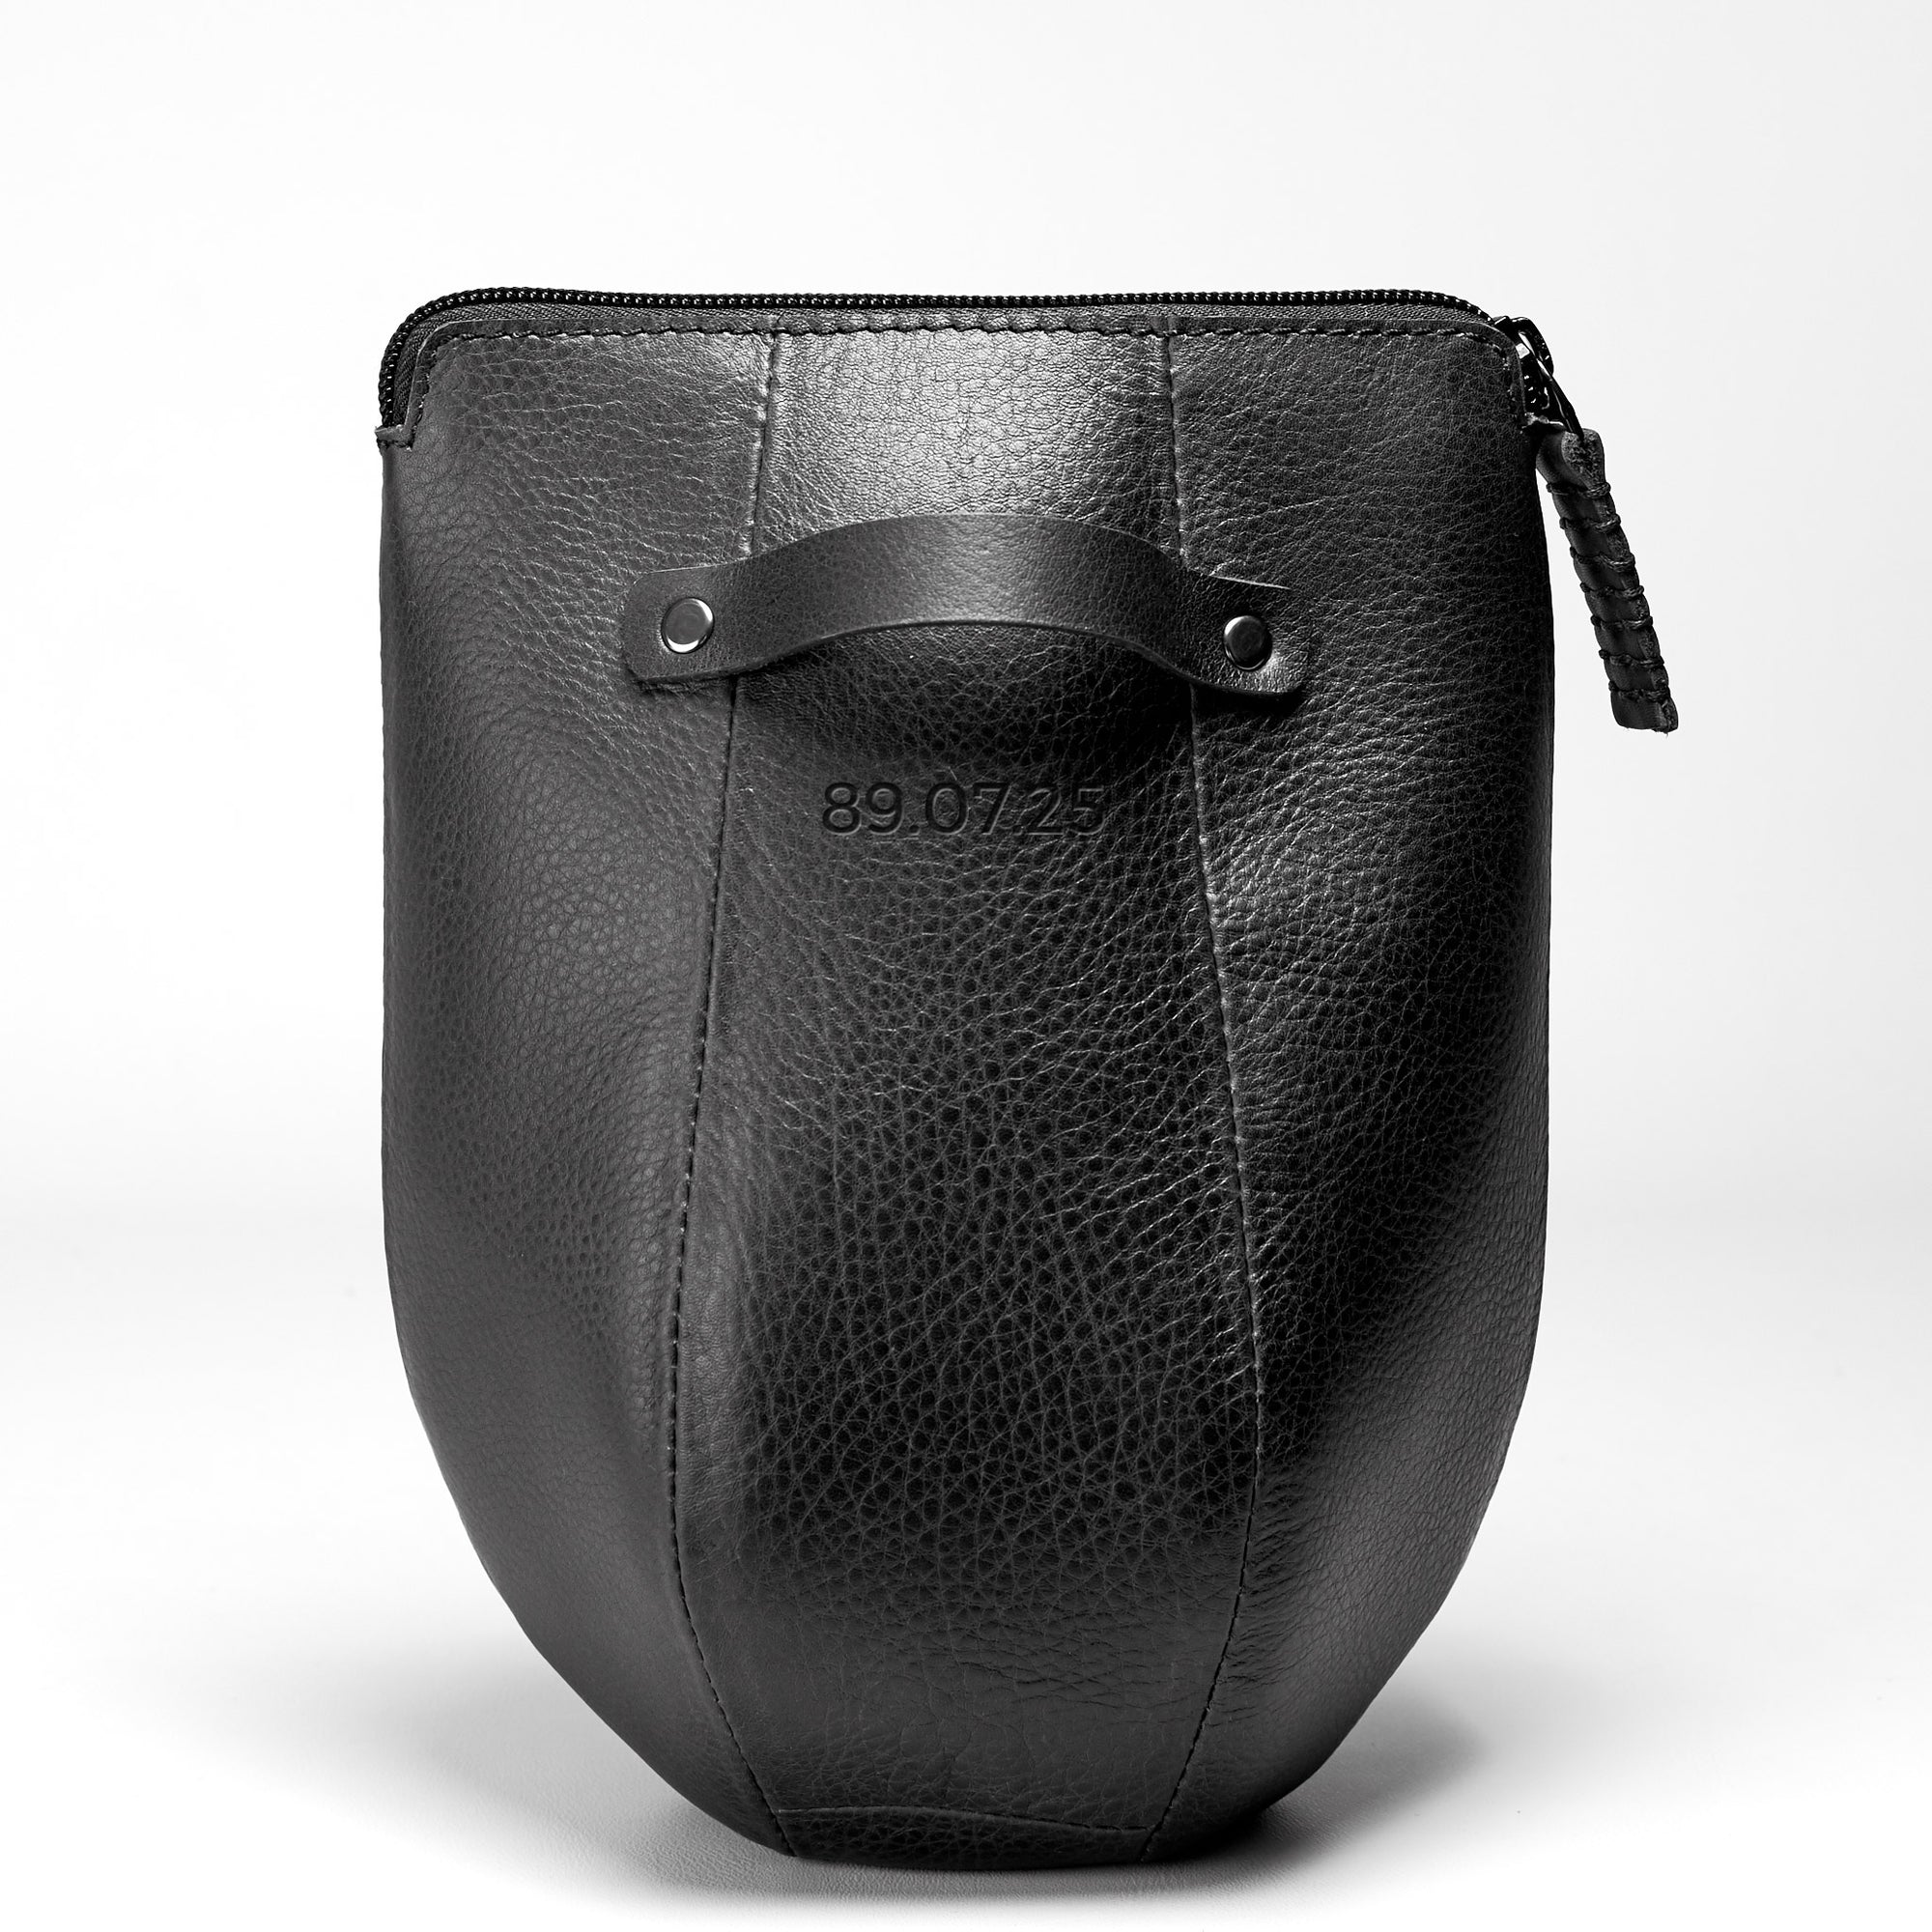 Custom engraving. Personalized monogram. Black leather travel dopp kit. Waterproof mens toiletry bag